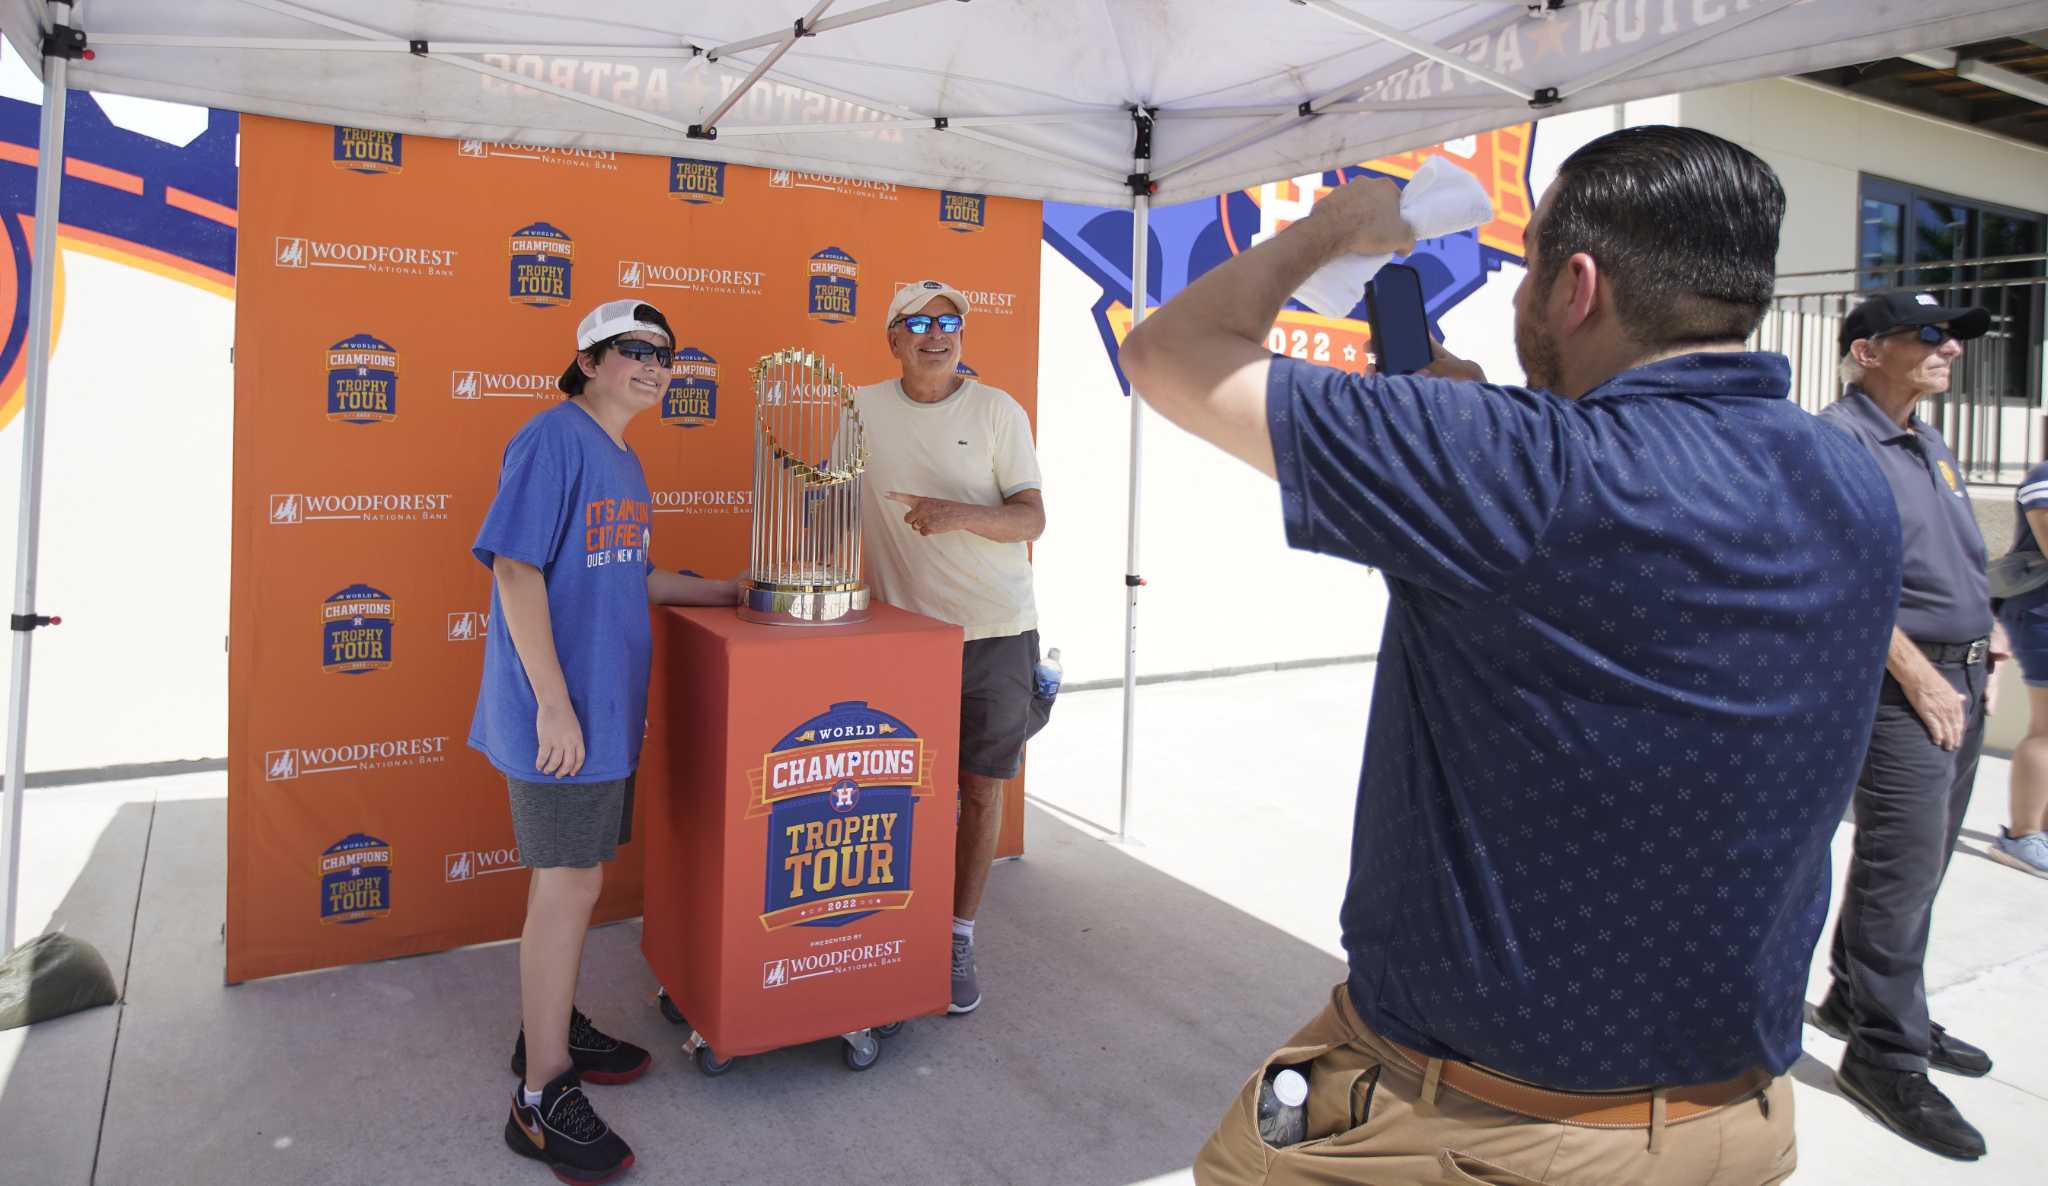 Astros Championship Trophy Tour visits Corpus Christi